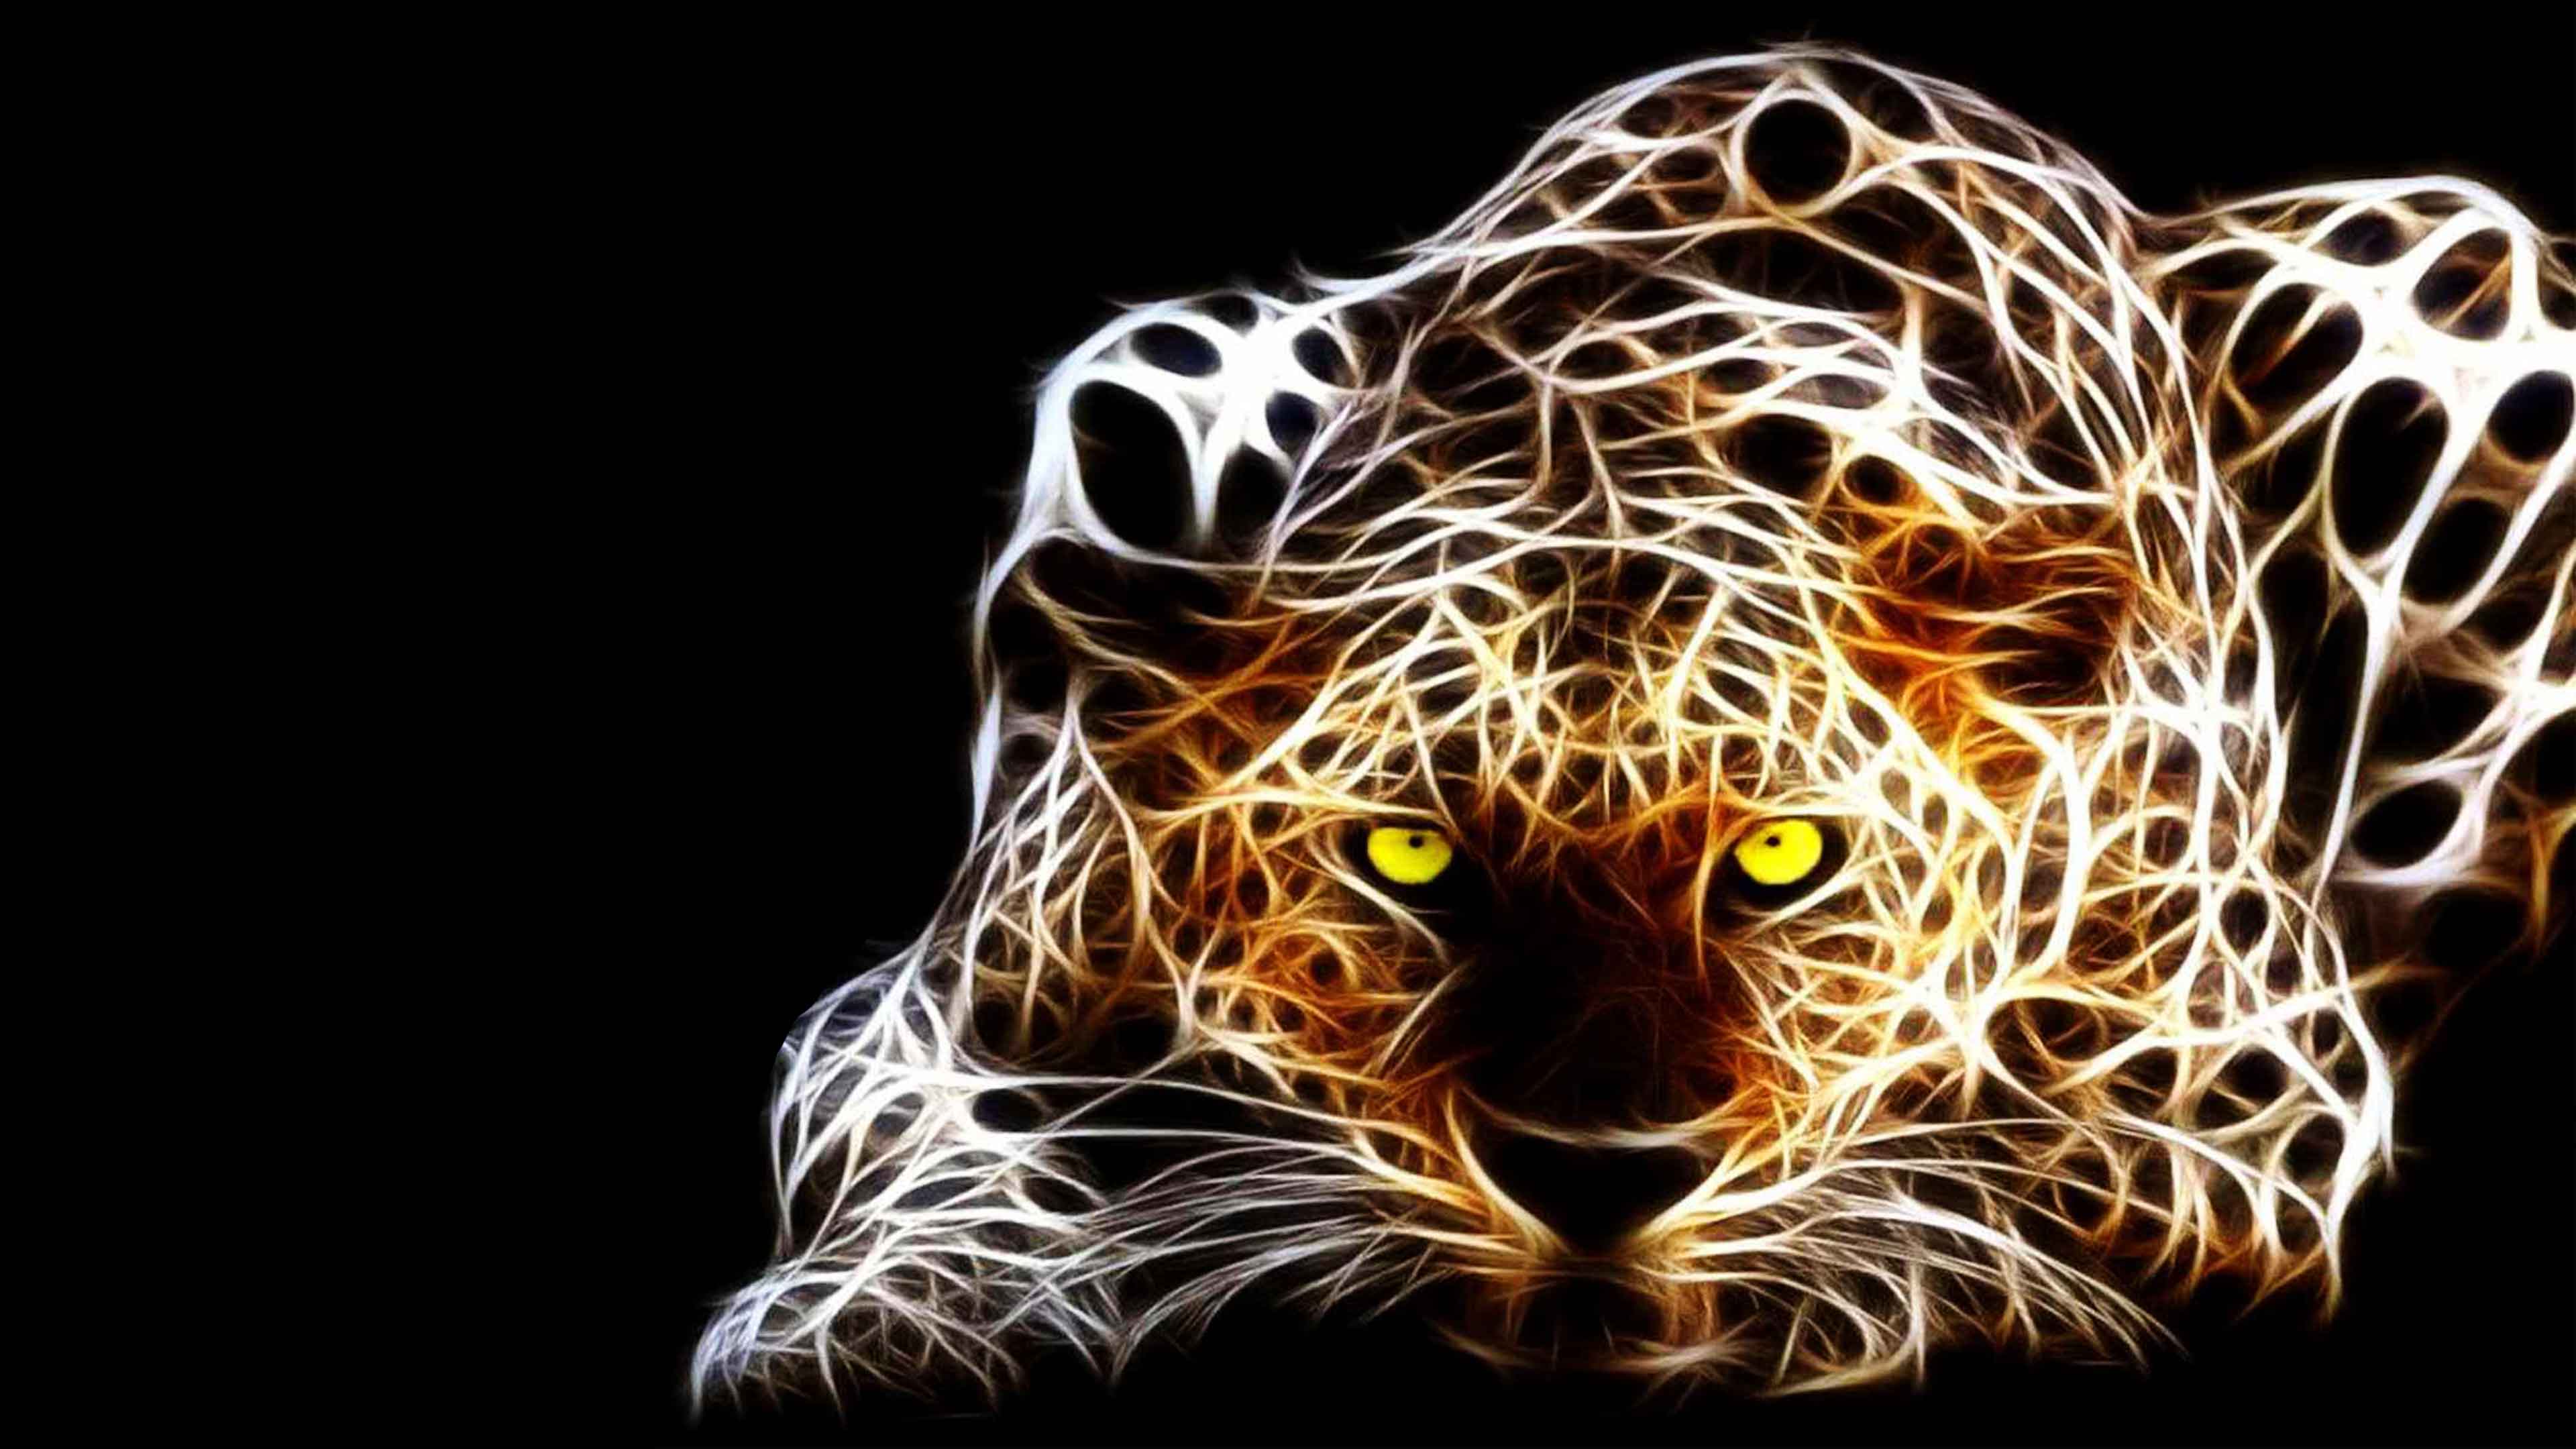 3D Animated Tiger Wallpaper